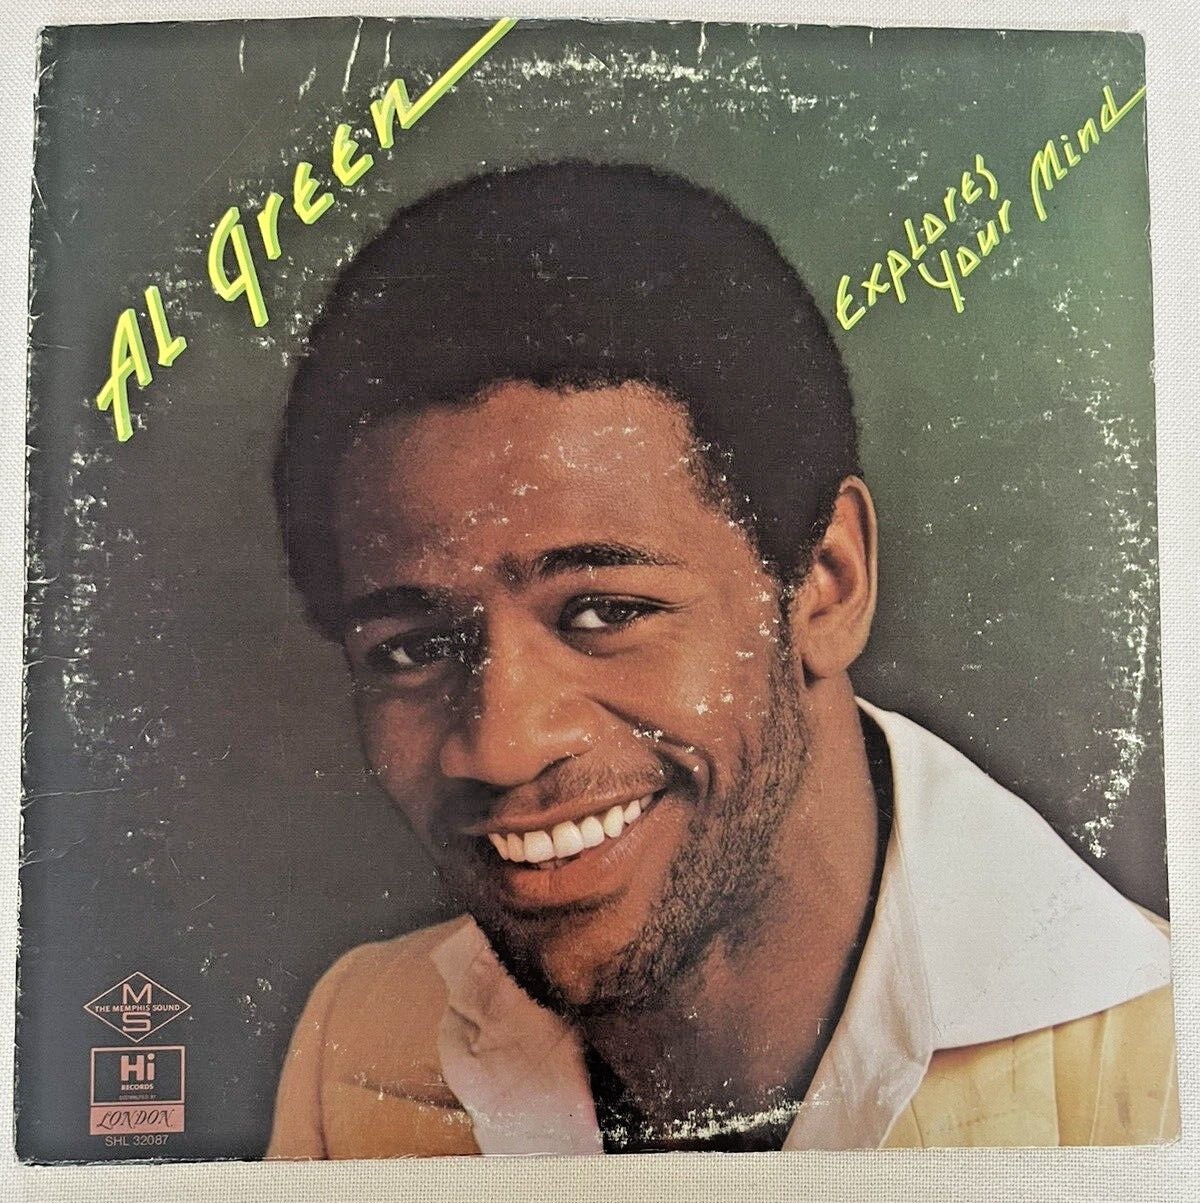 Al Green Explores Your Mind vinyl LP - London SHL 32087